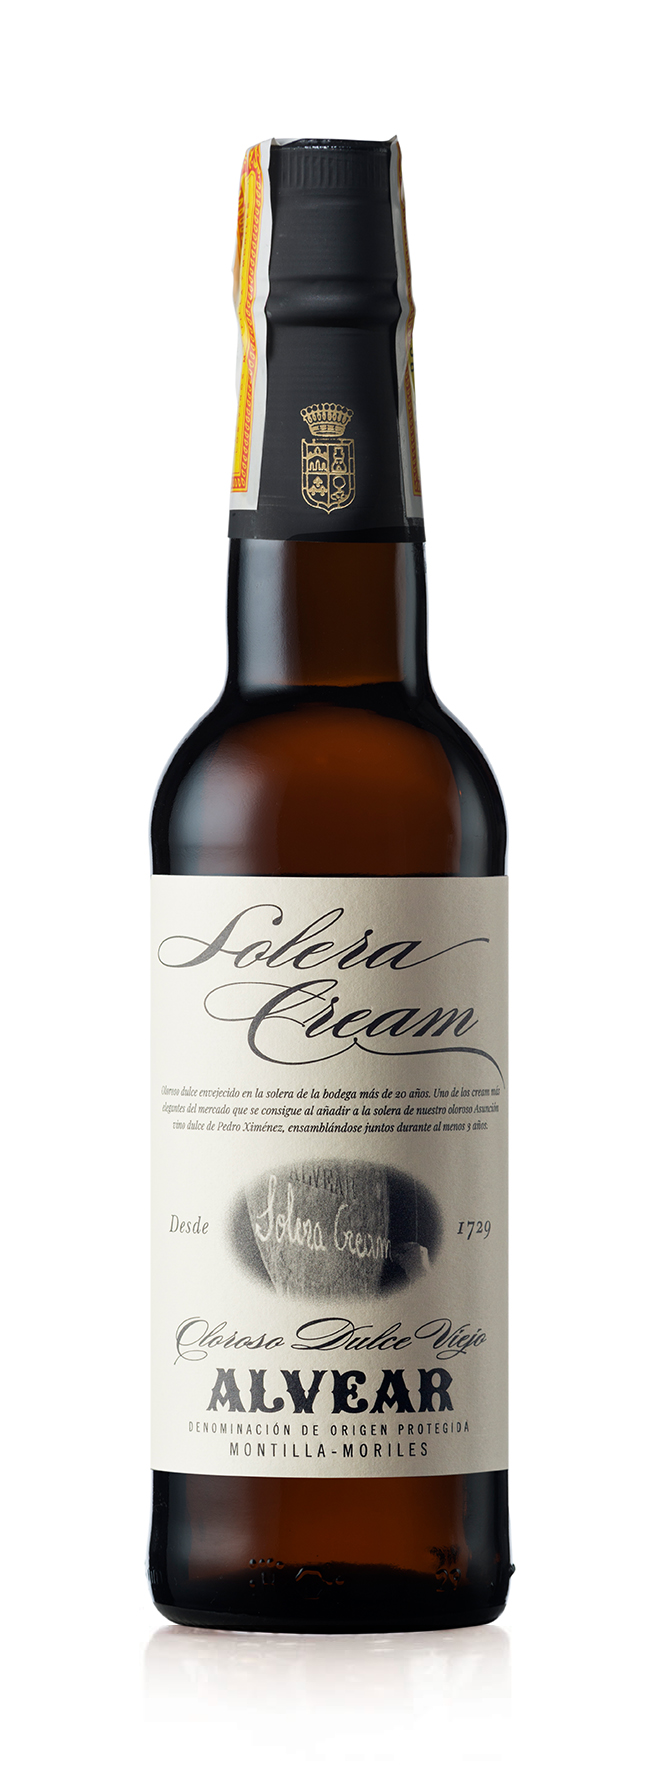 Solera Cream Bottle Photo